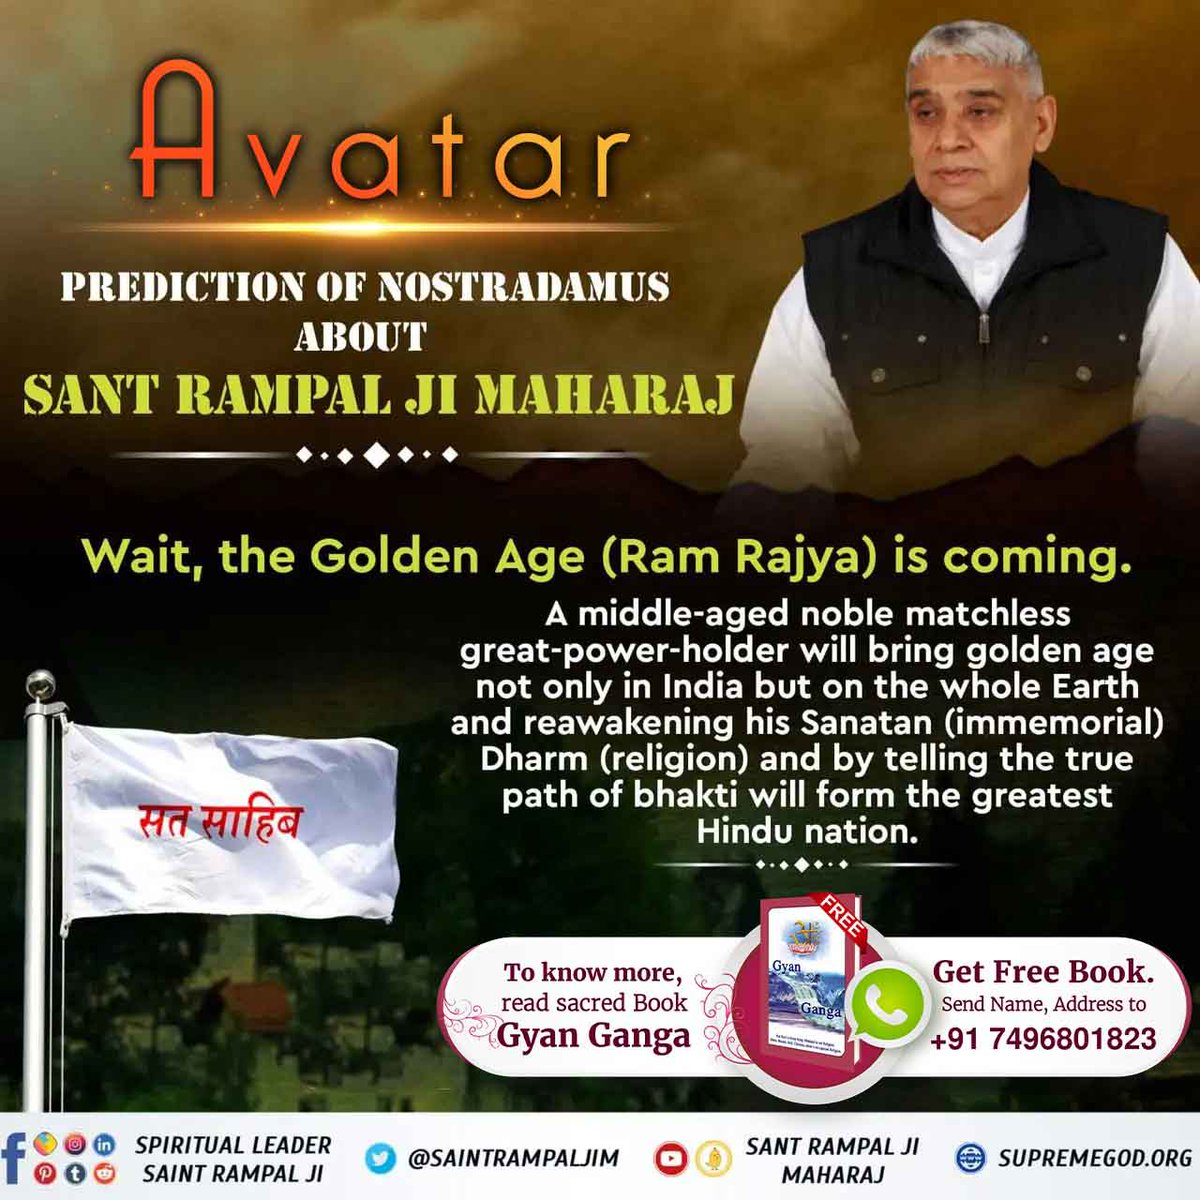 #आदि_सनातनधर्म_होगाप्रतिष्ठित Avata PREDICTION OF NATRADAMUS ABOUT SANT RAMPAL JI MAHARAJ wait, the Golden Age (RAM RAJYA)is coming. -SantRampalJiMaharaj